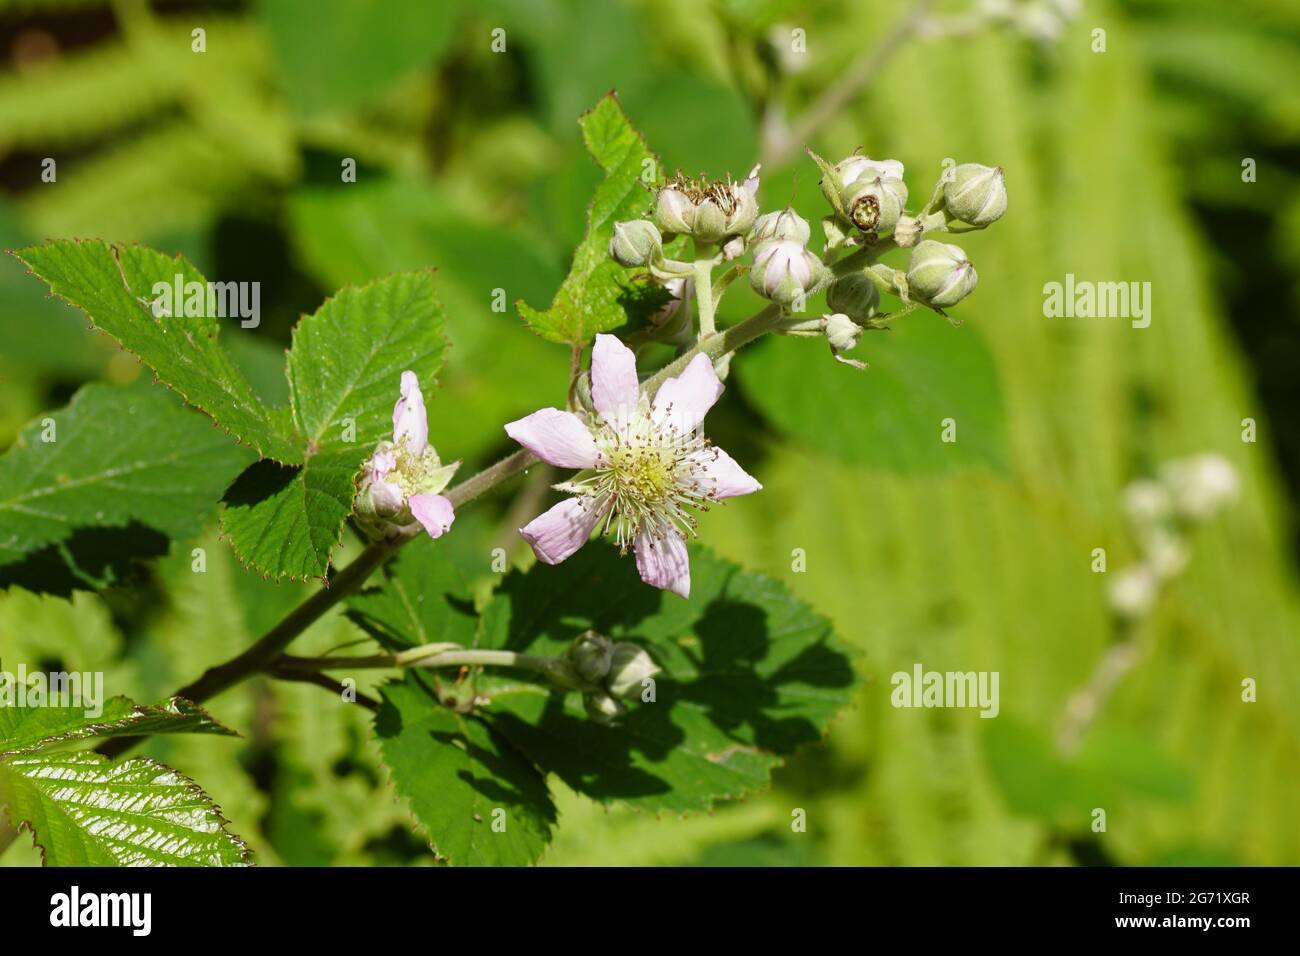 Flowering Thornless Blackberry (Rubus Hybrid). Family Rosaceae. July, in a Dutch garden. Stock Photo